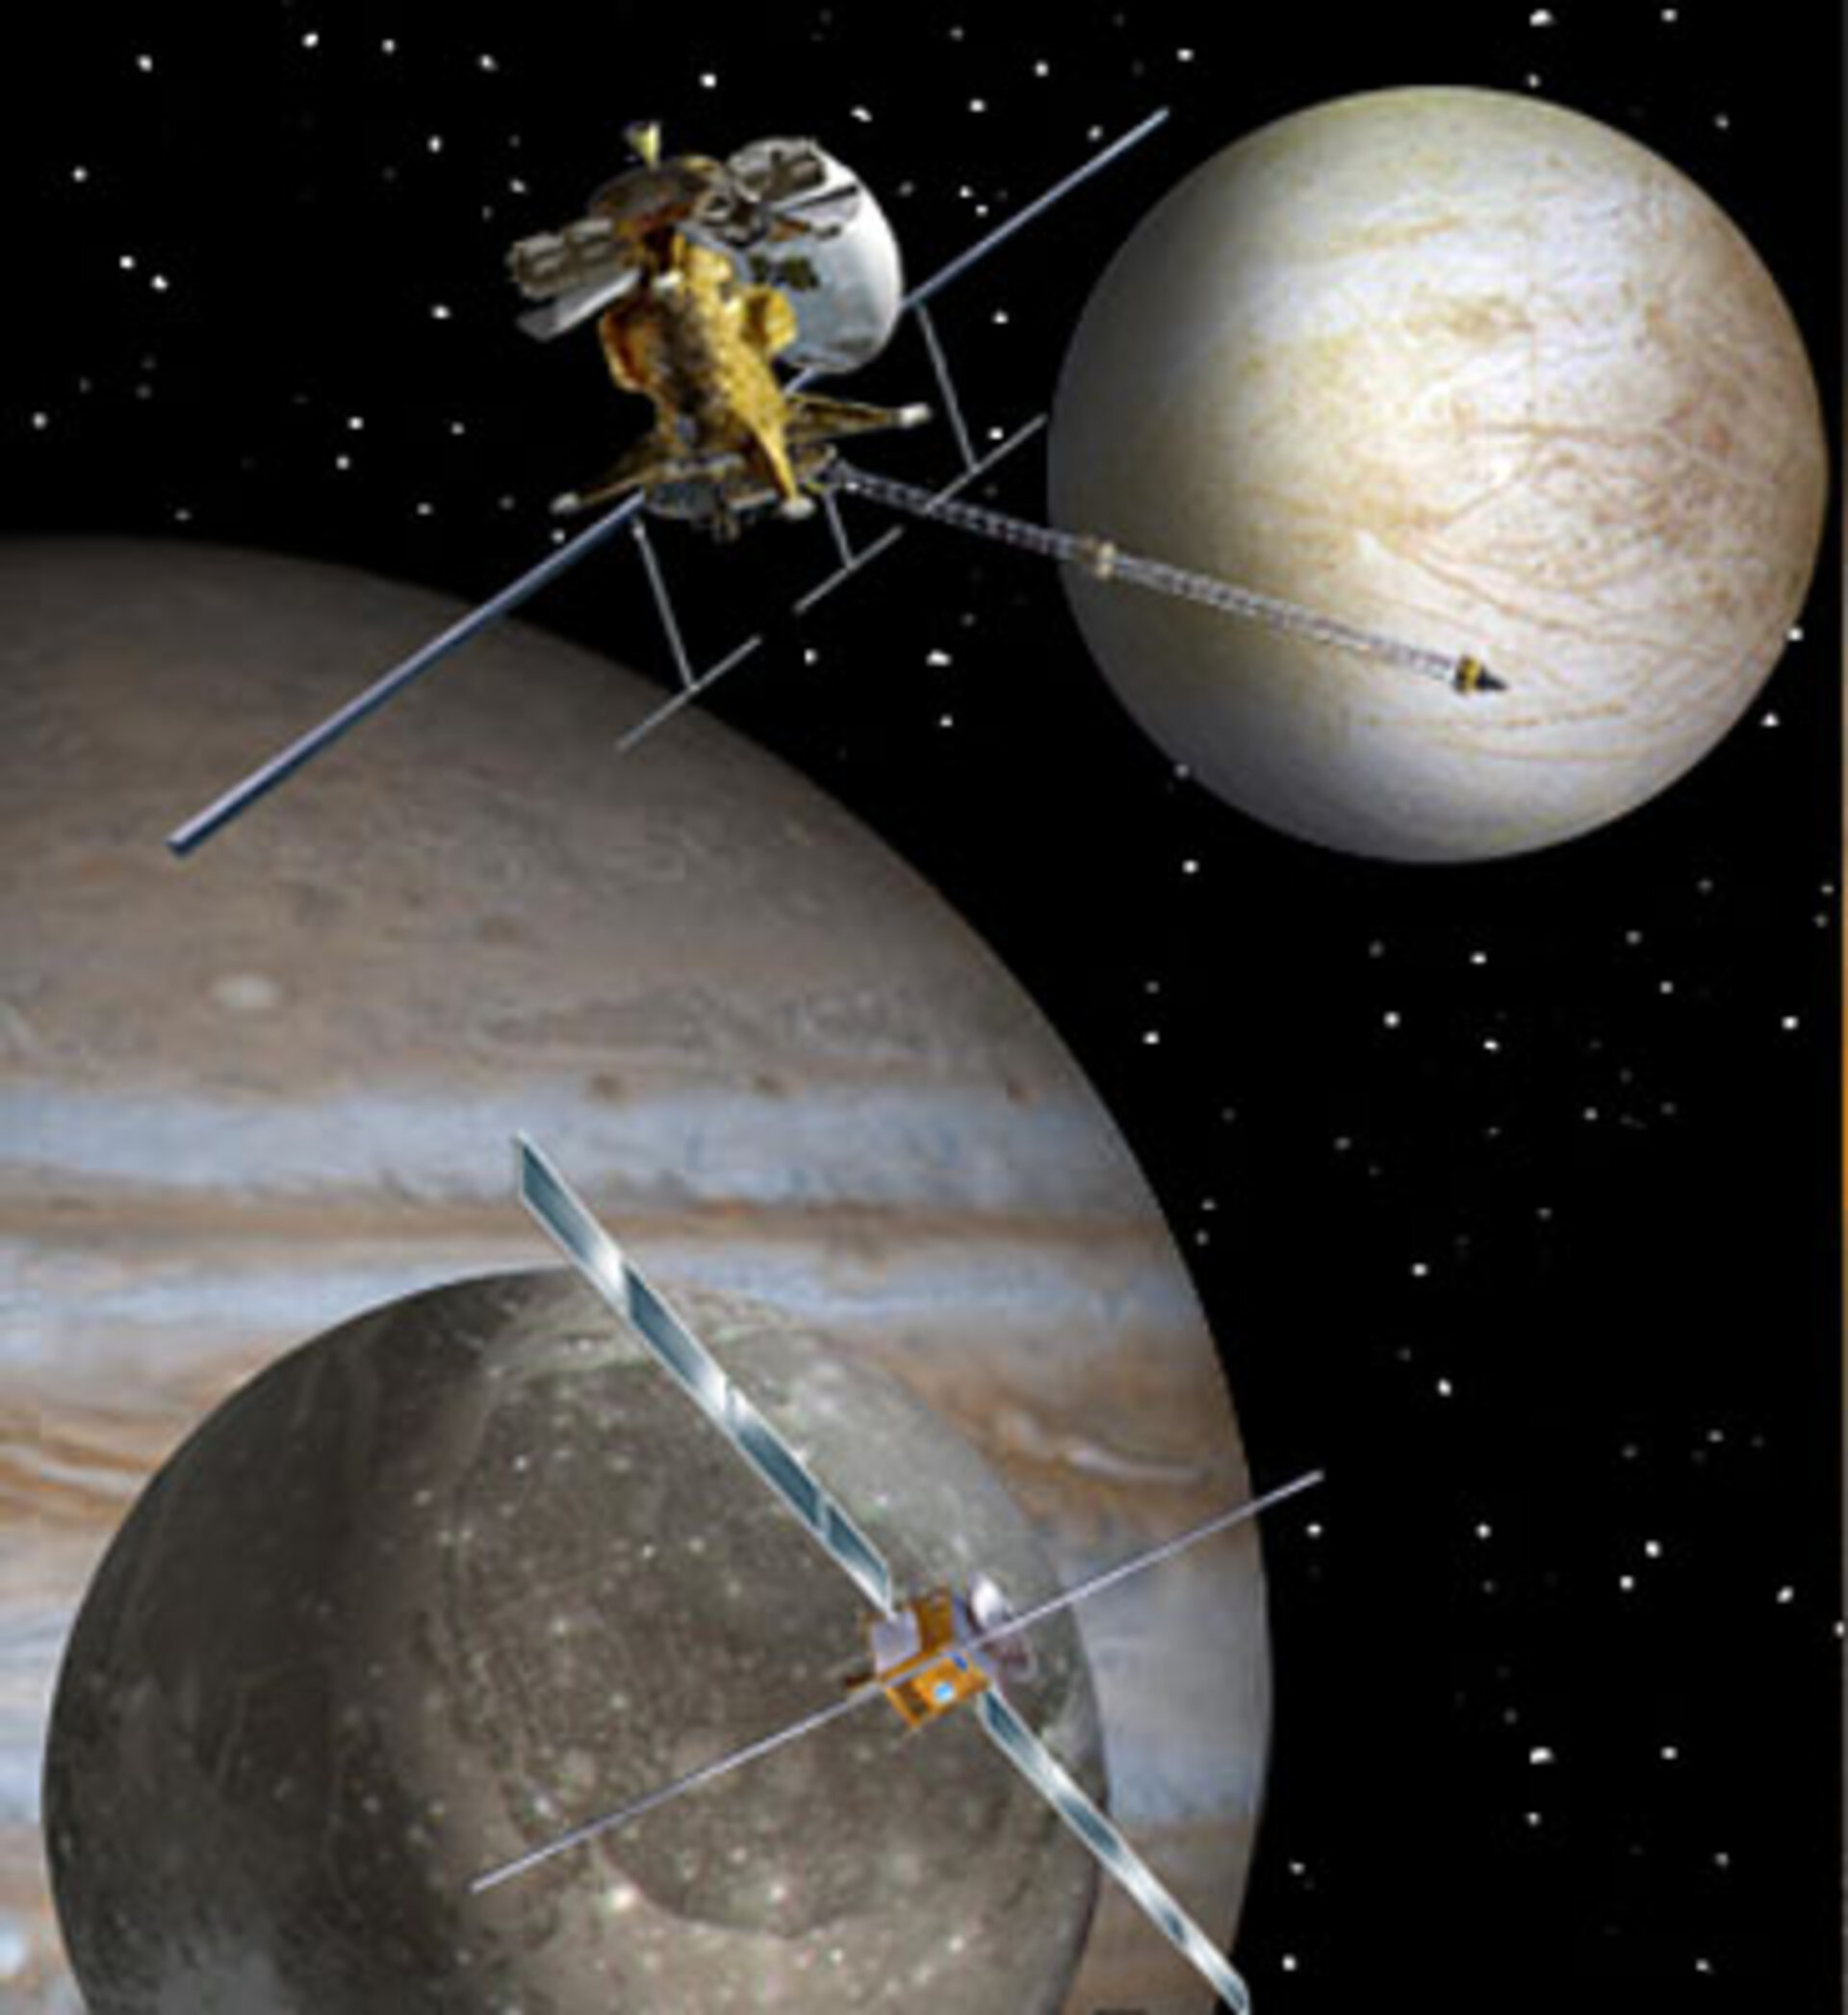 The ESA/NASA mission to the Jupiter system